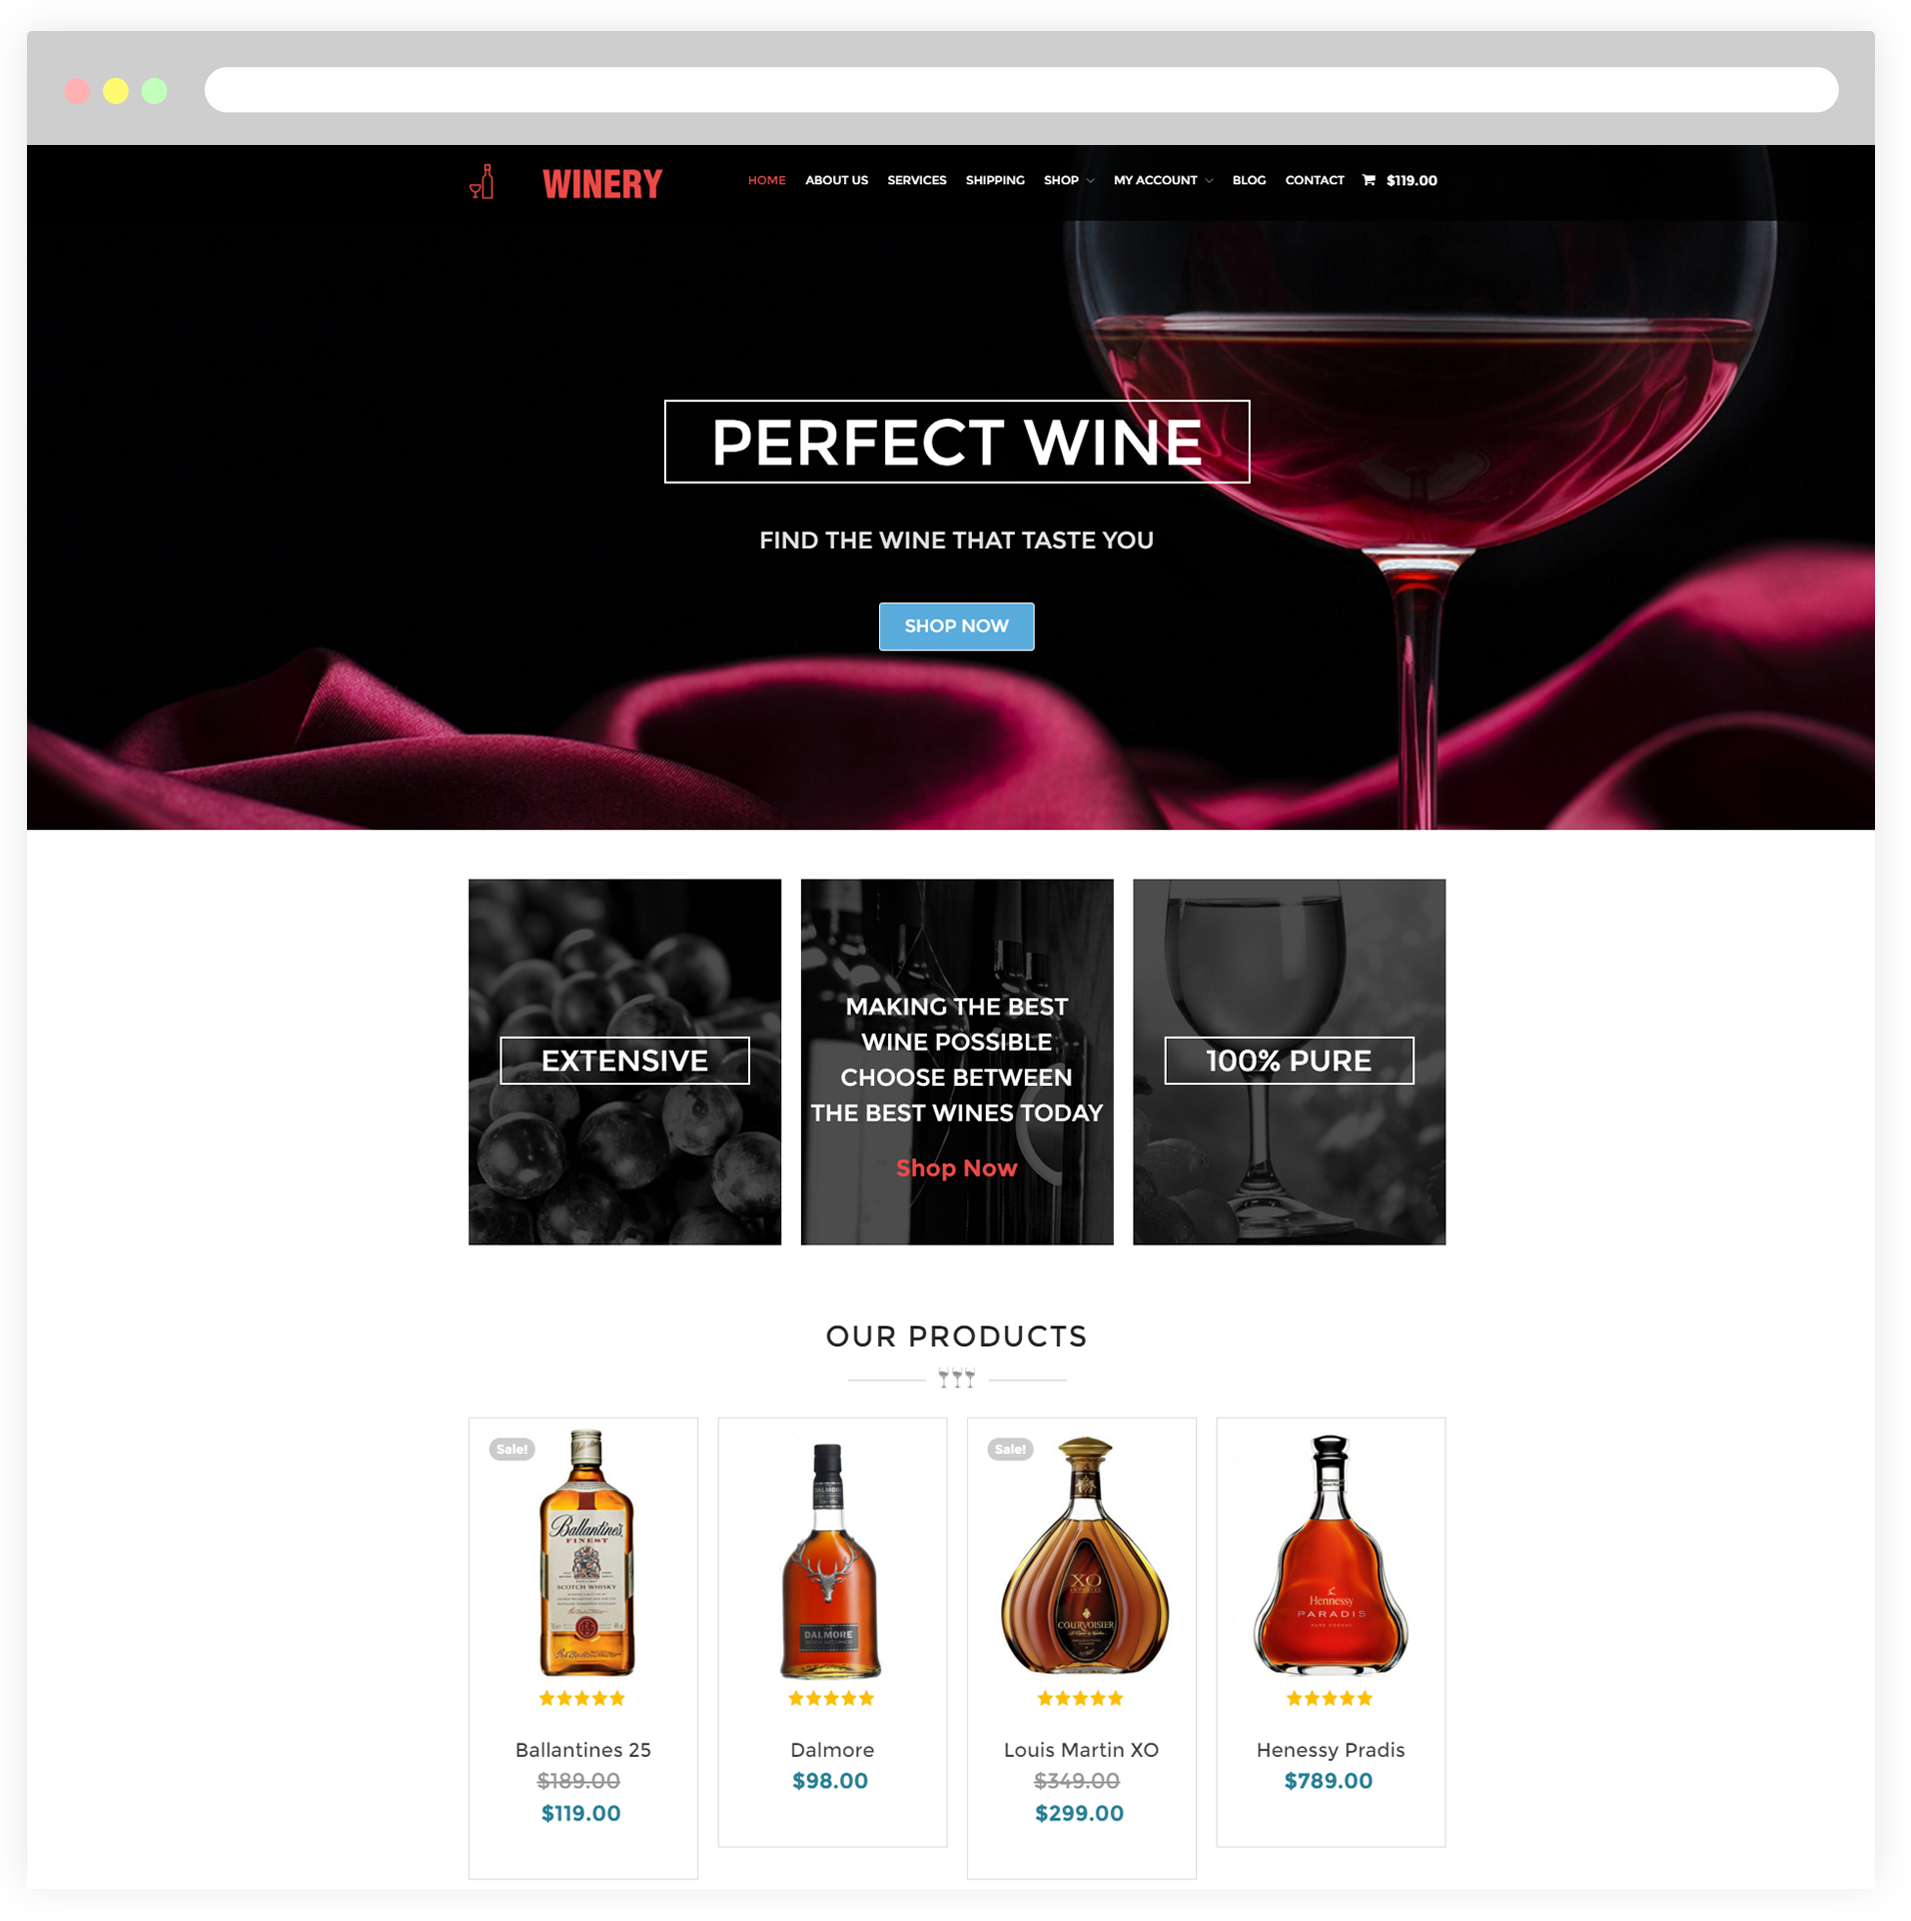 Https://Ltheme.com/Project/Lt-Winery-Free-Responsive-Wine-Store-Wordpress-Theme/